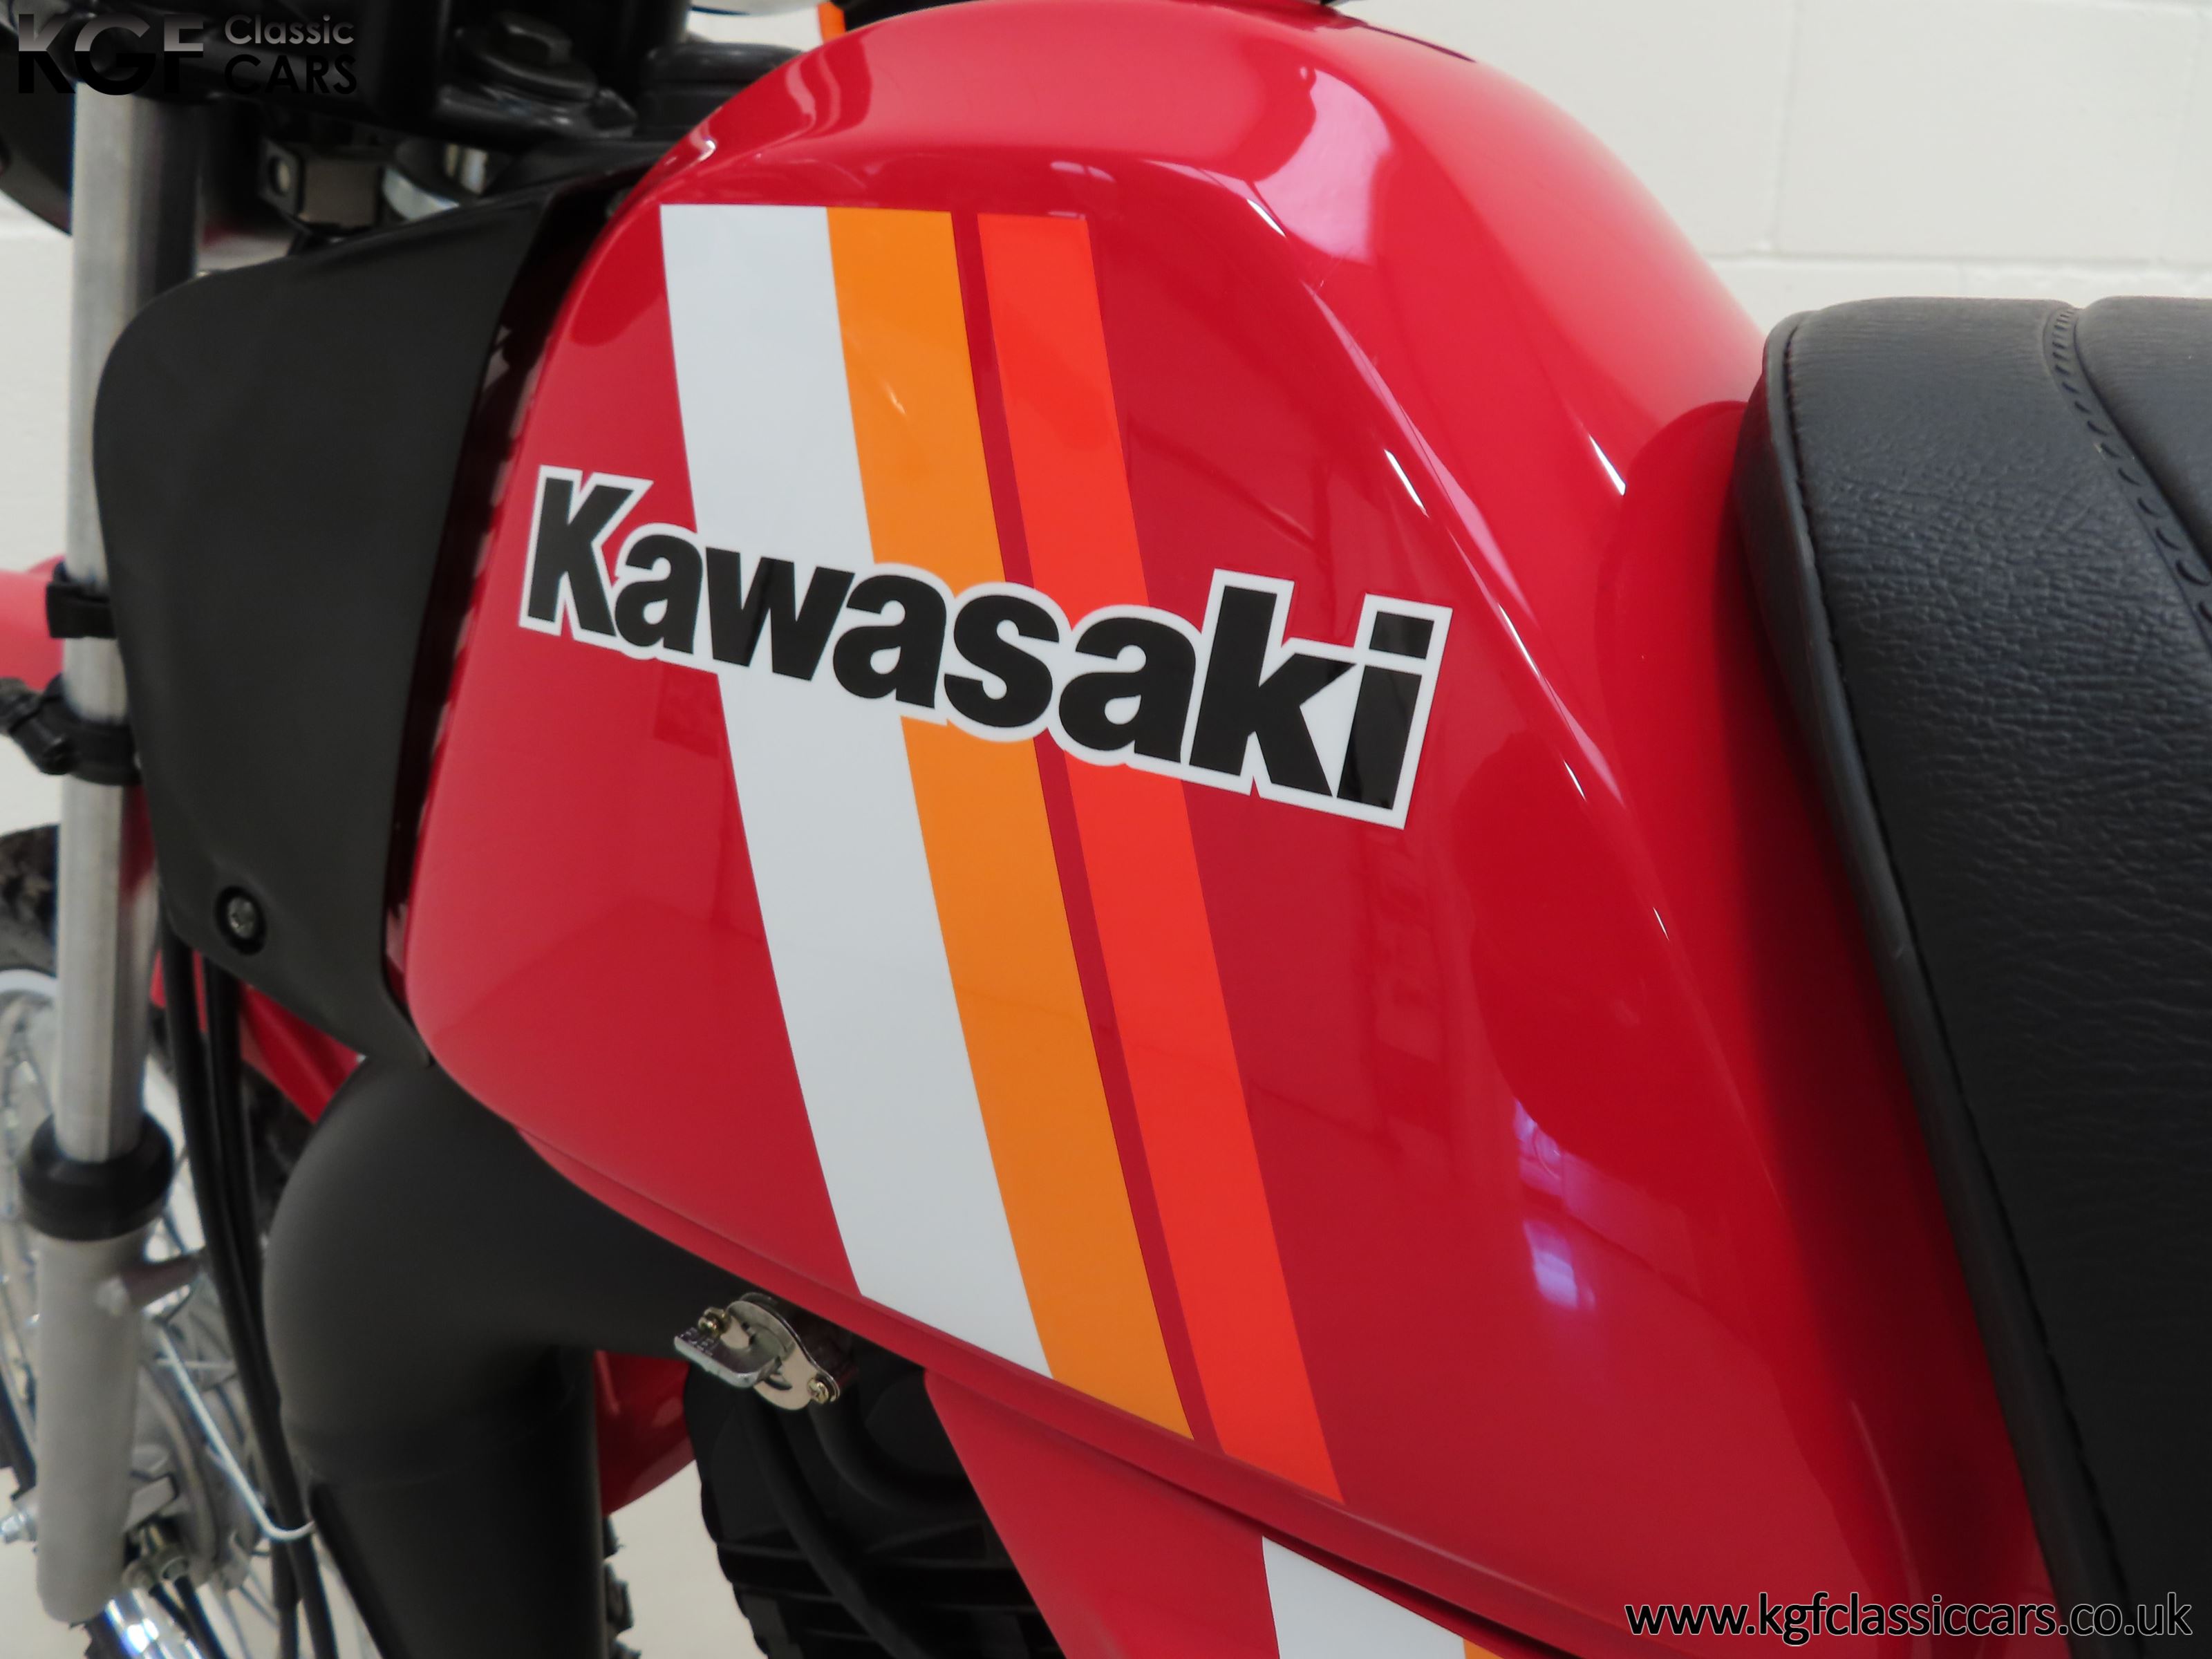 Kawasaki ae50 idikb1qg1uwxoaonu6uum